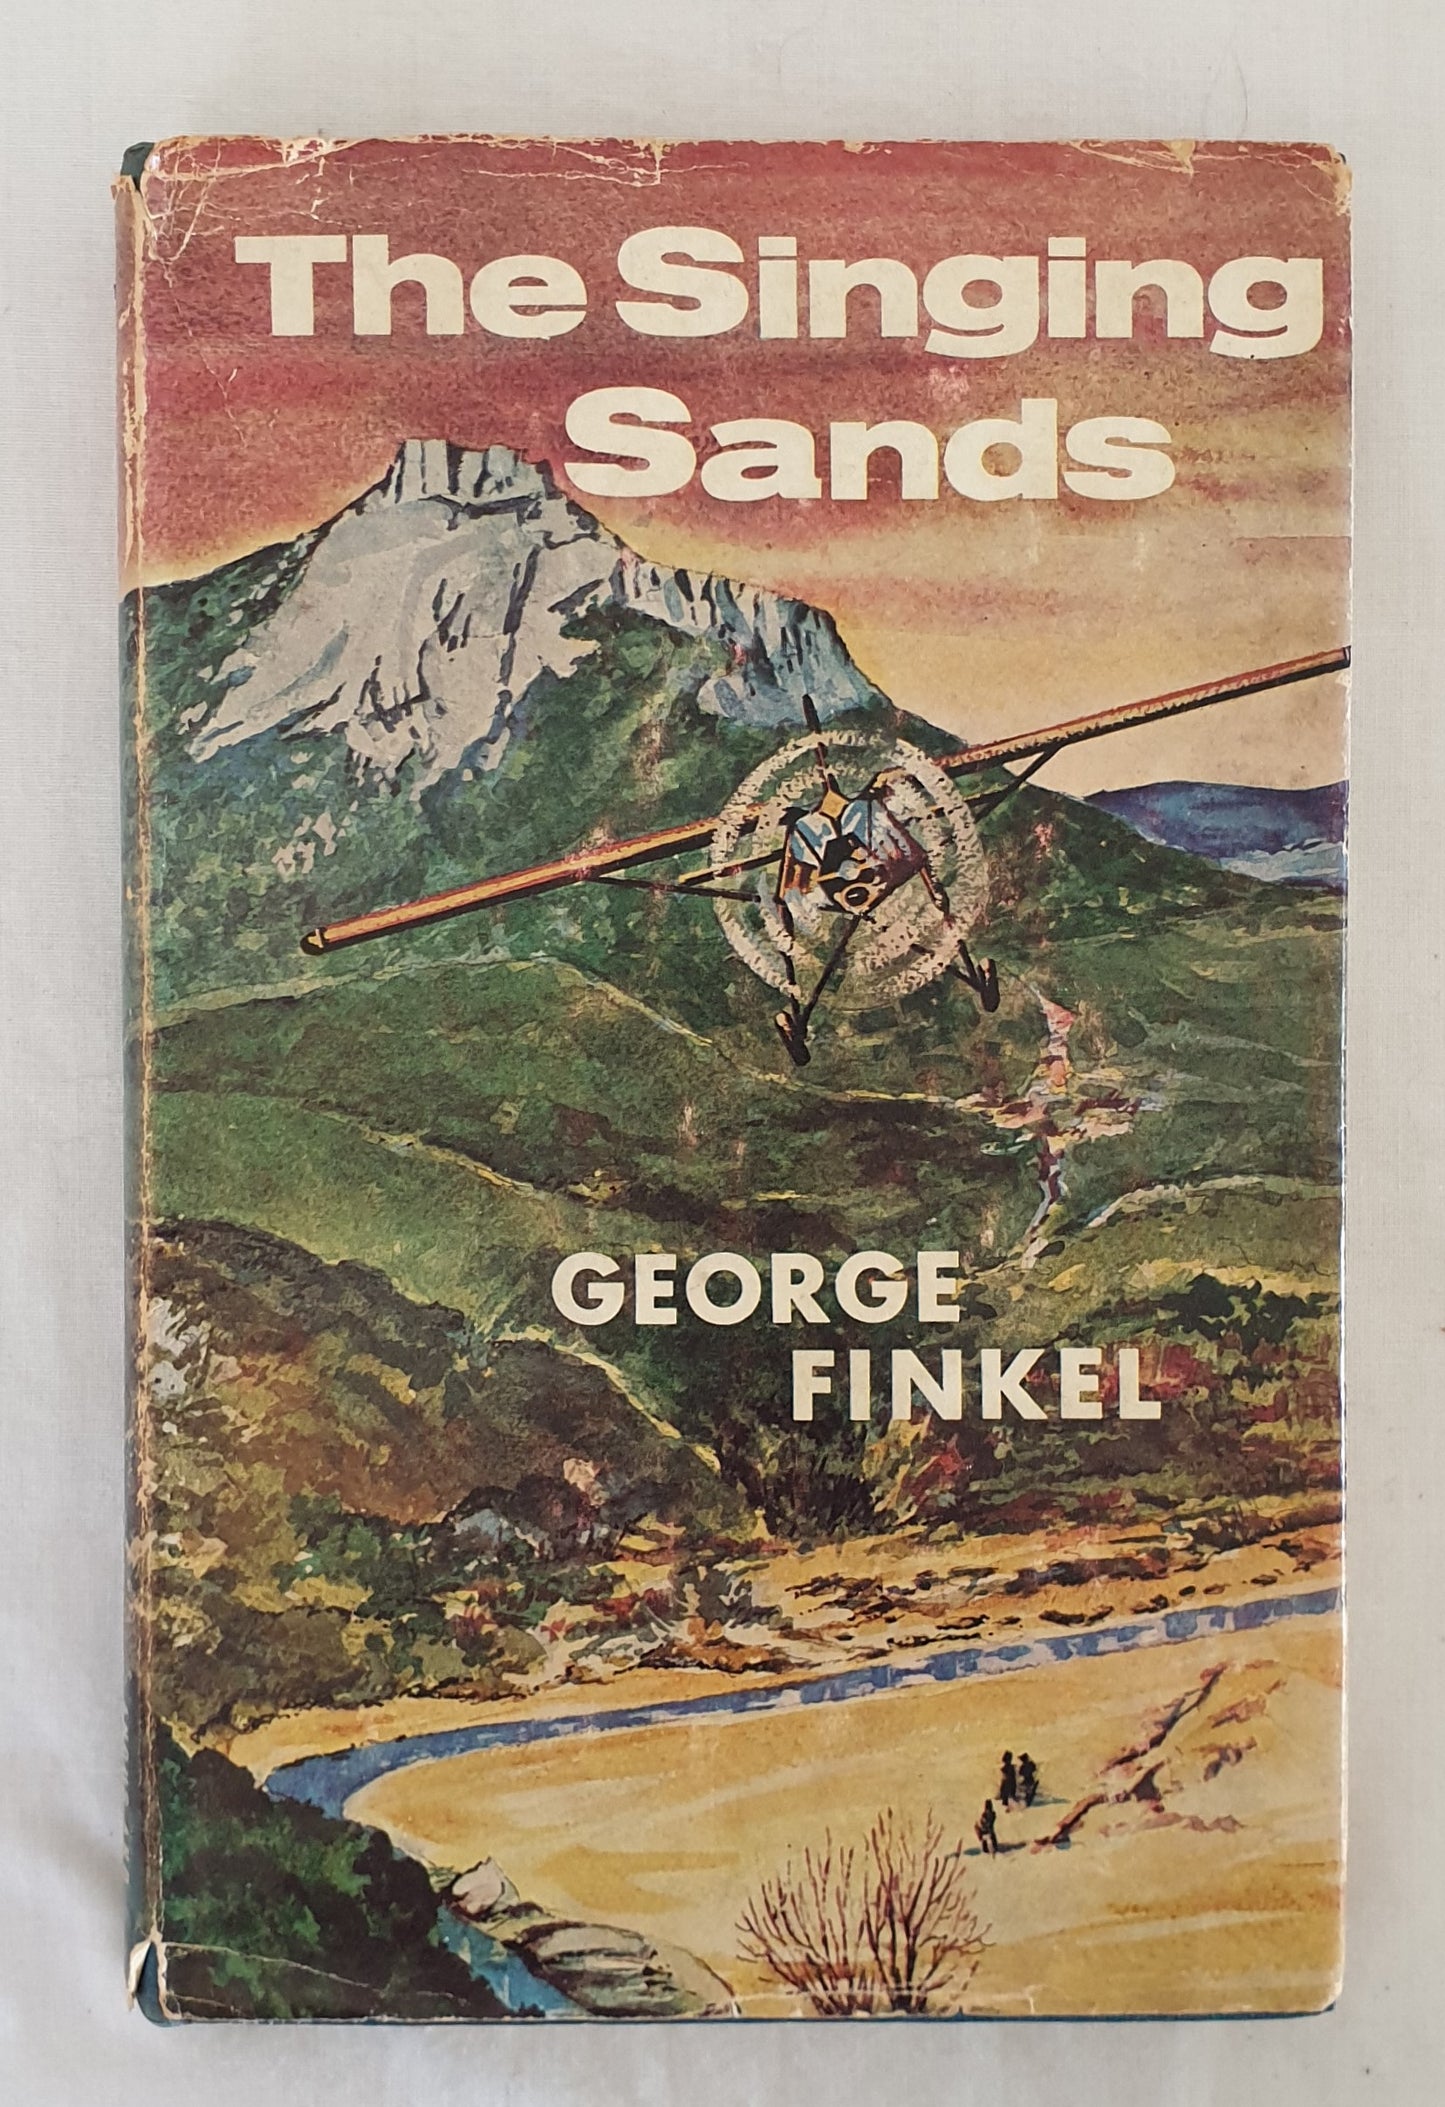 The Singing Sands by George Finkel